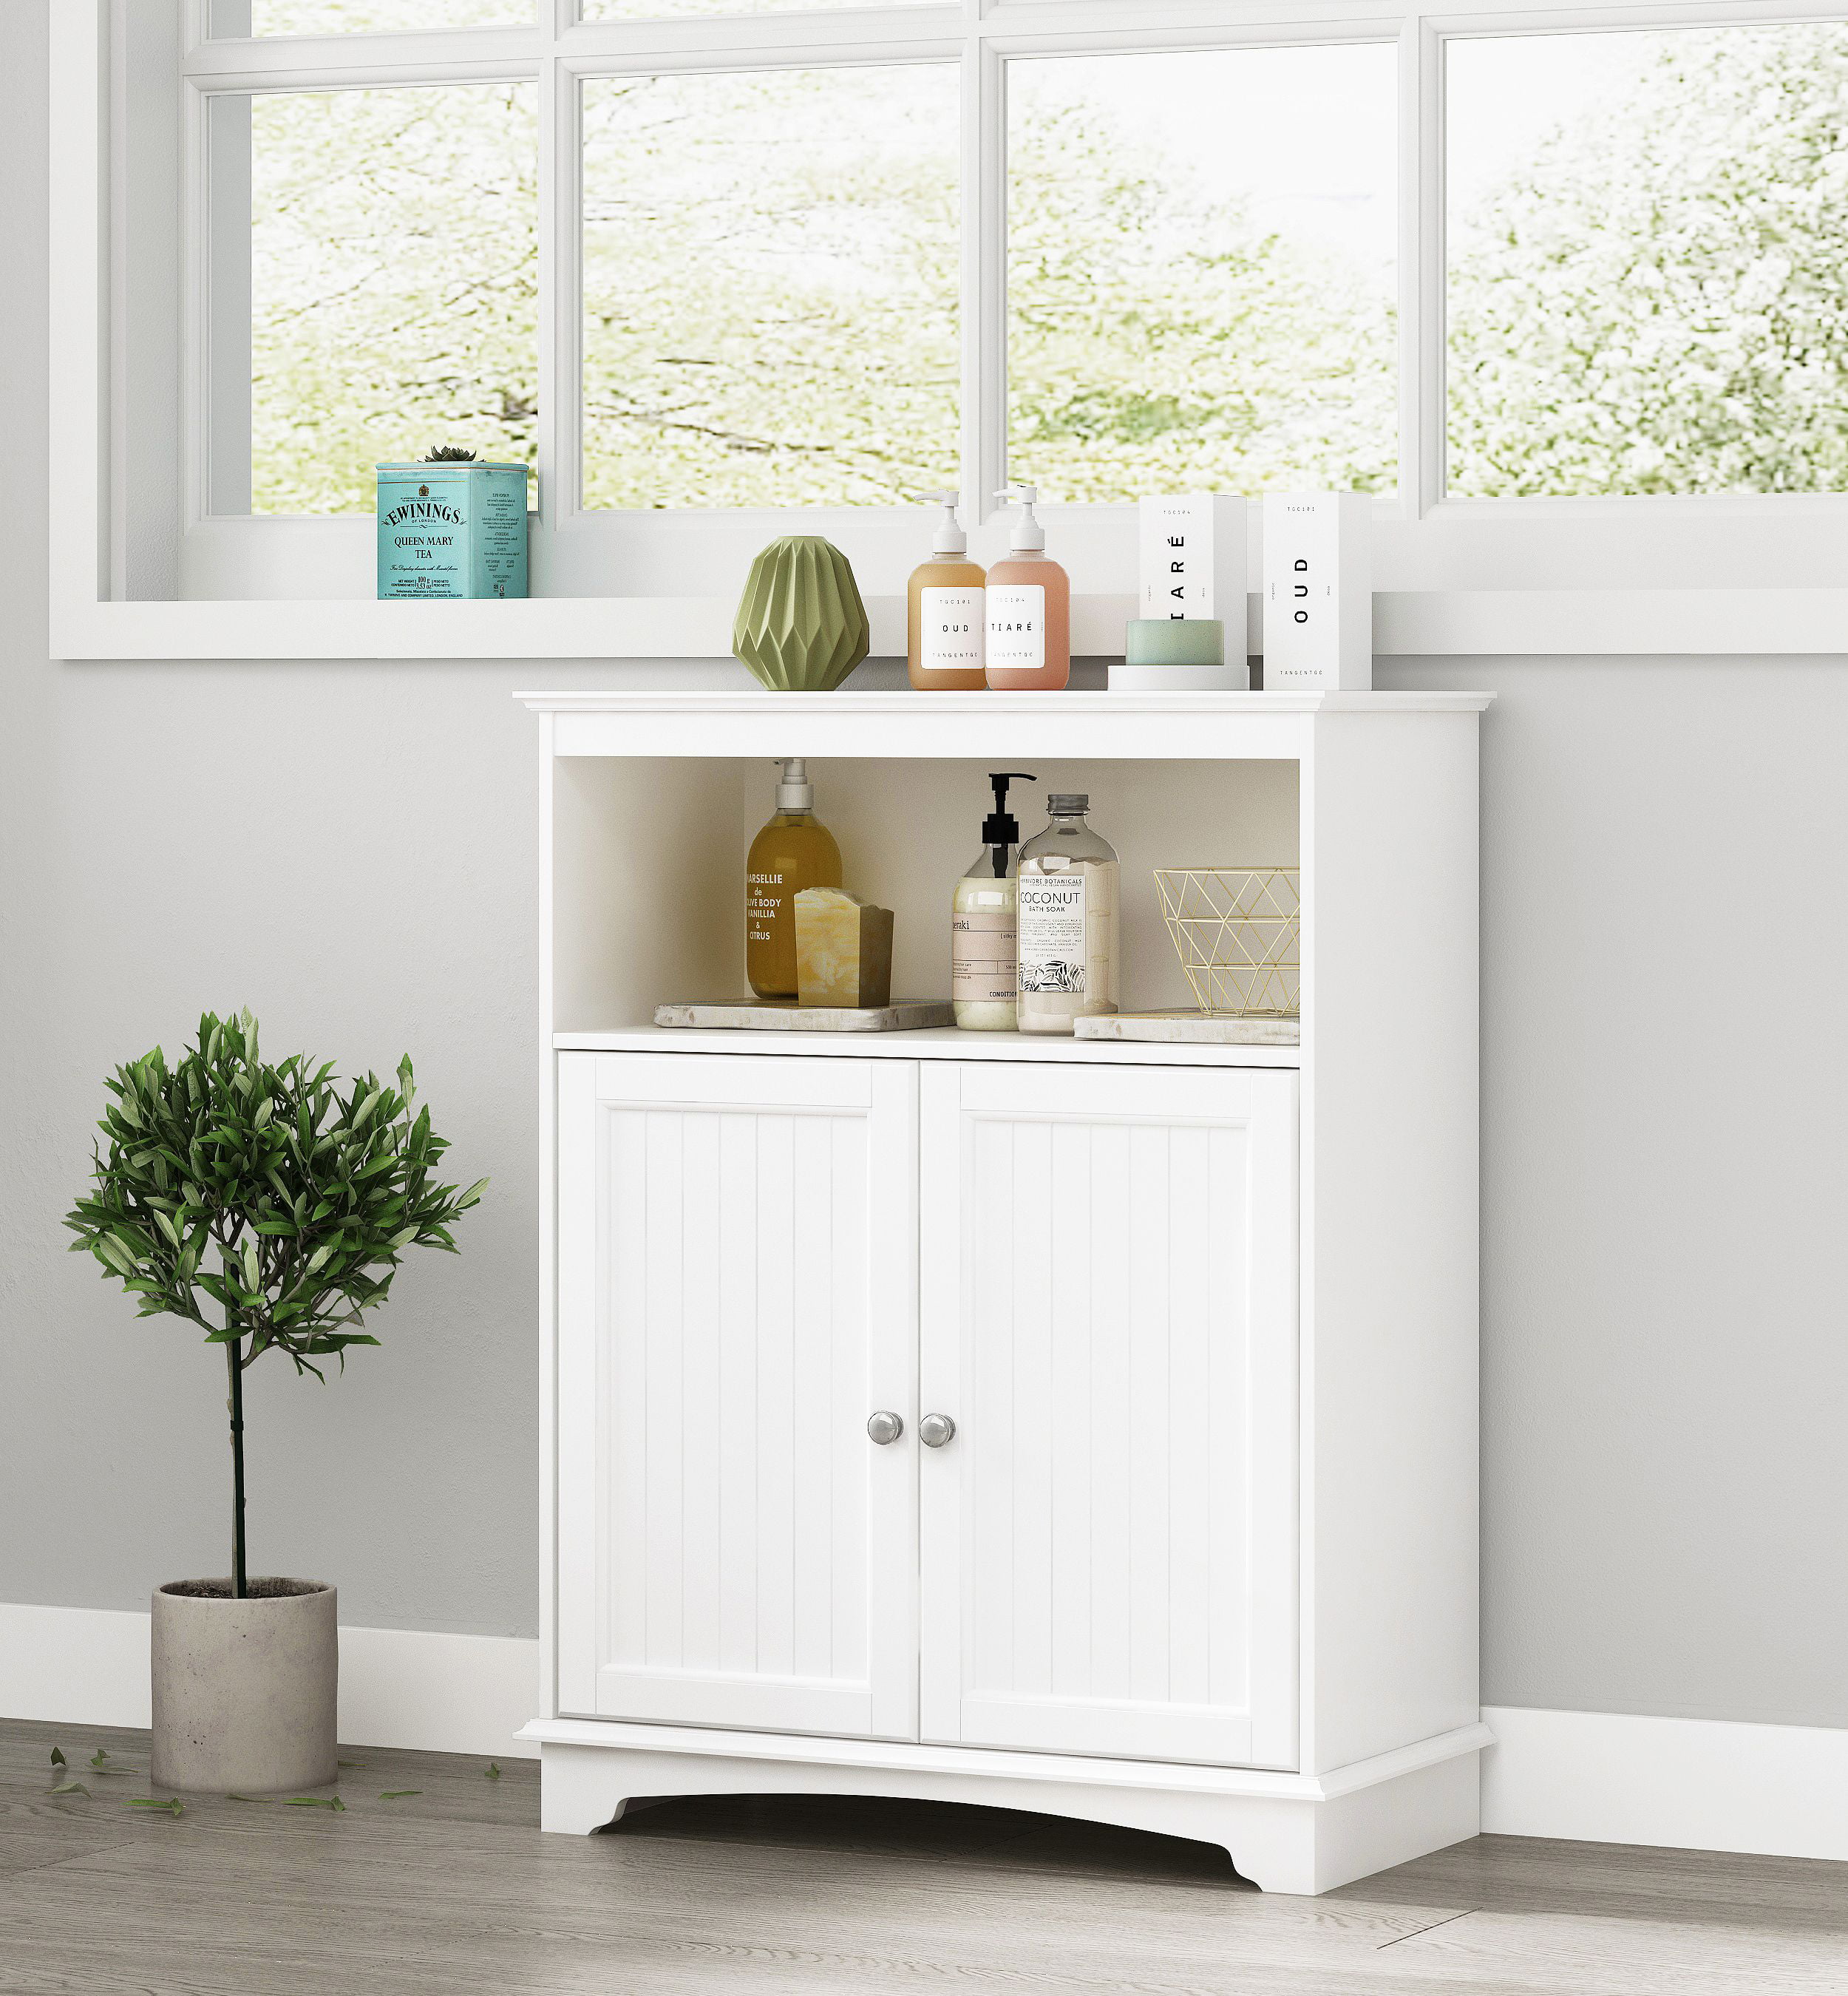 White Bathroom Floor Cabinet With Shelf - Image to u